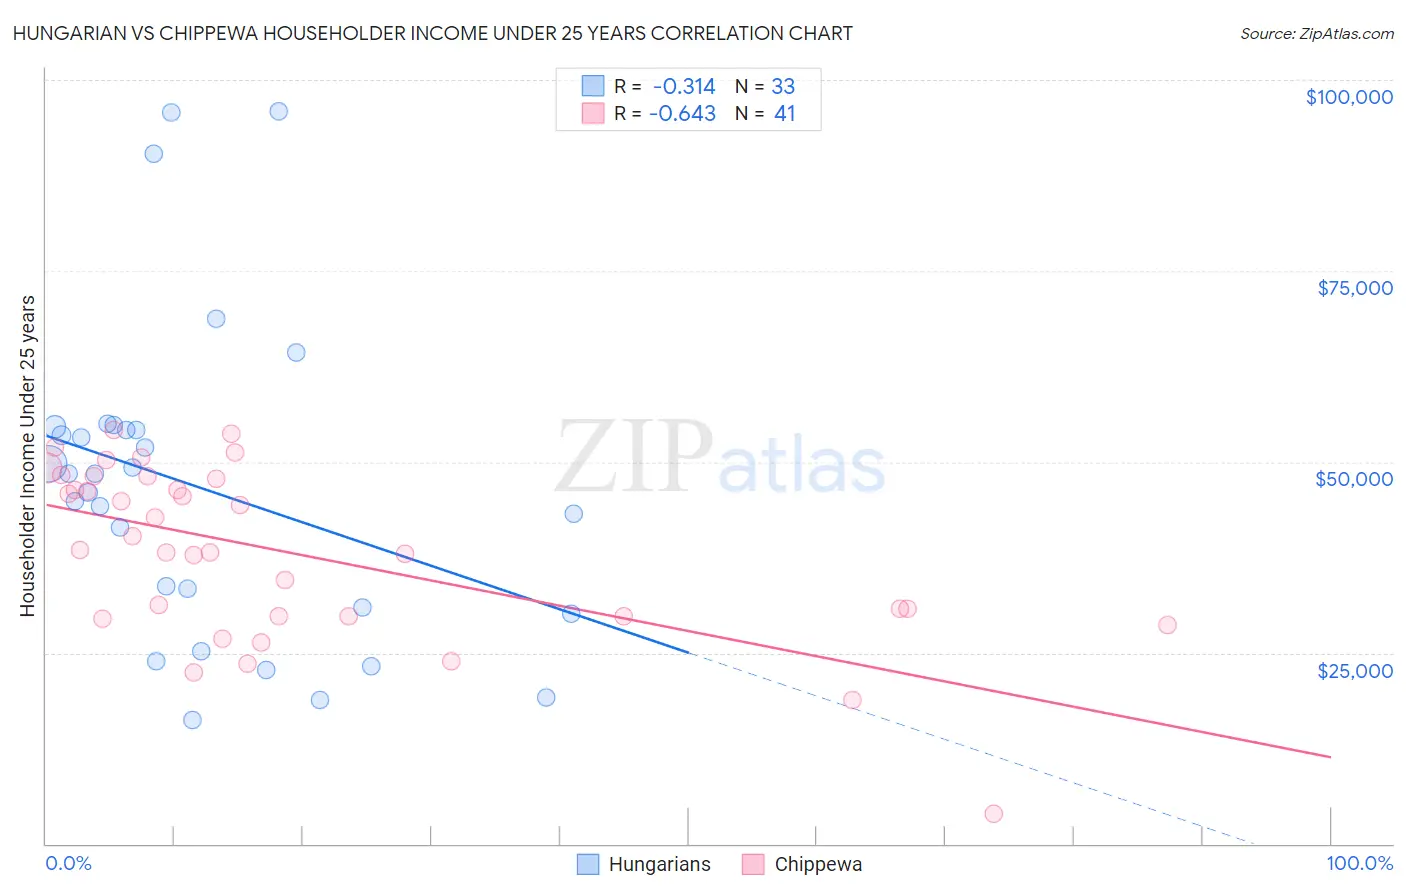 Hungarian vs Chippewa Householder Income Under 25 years